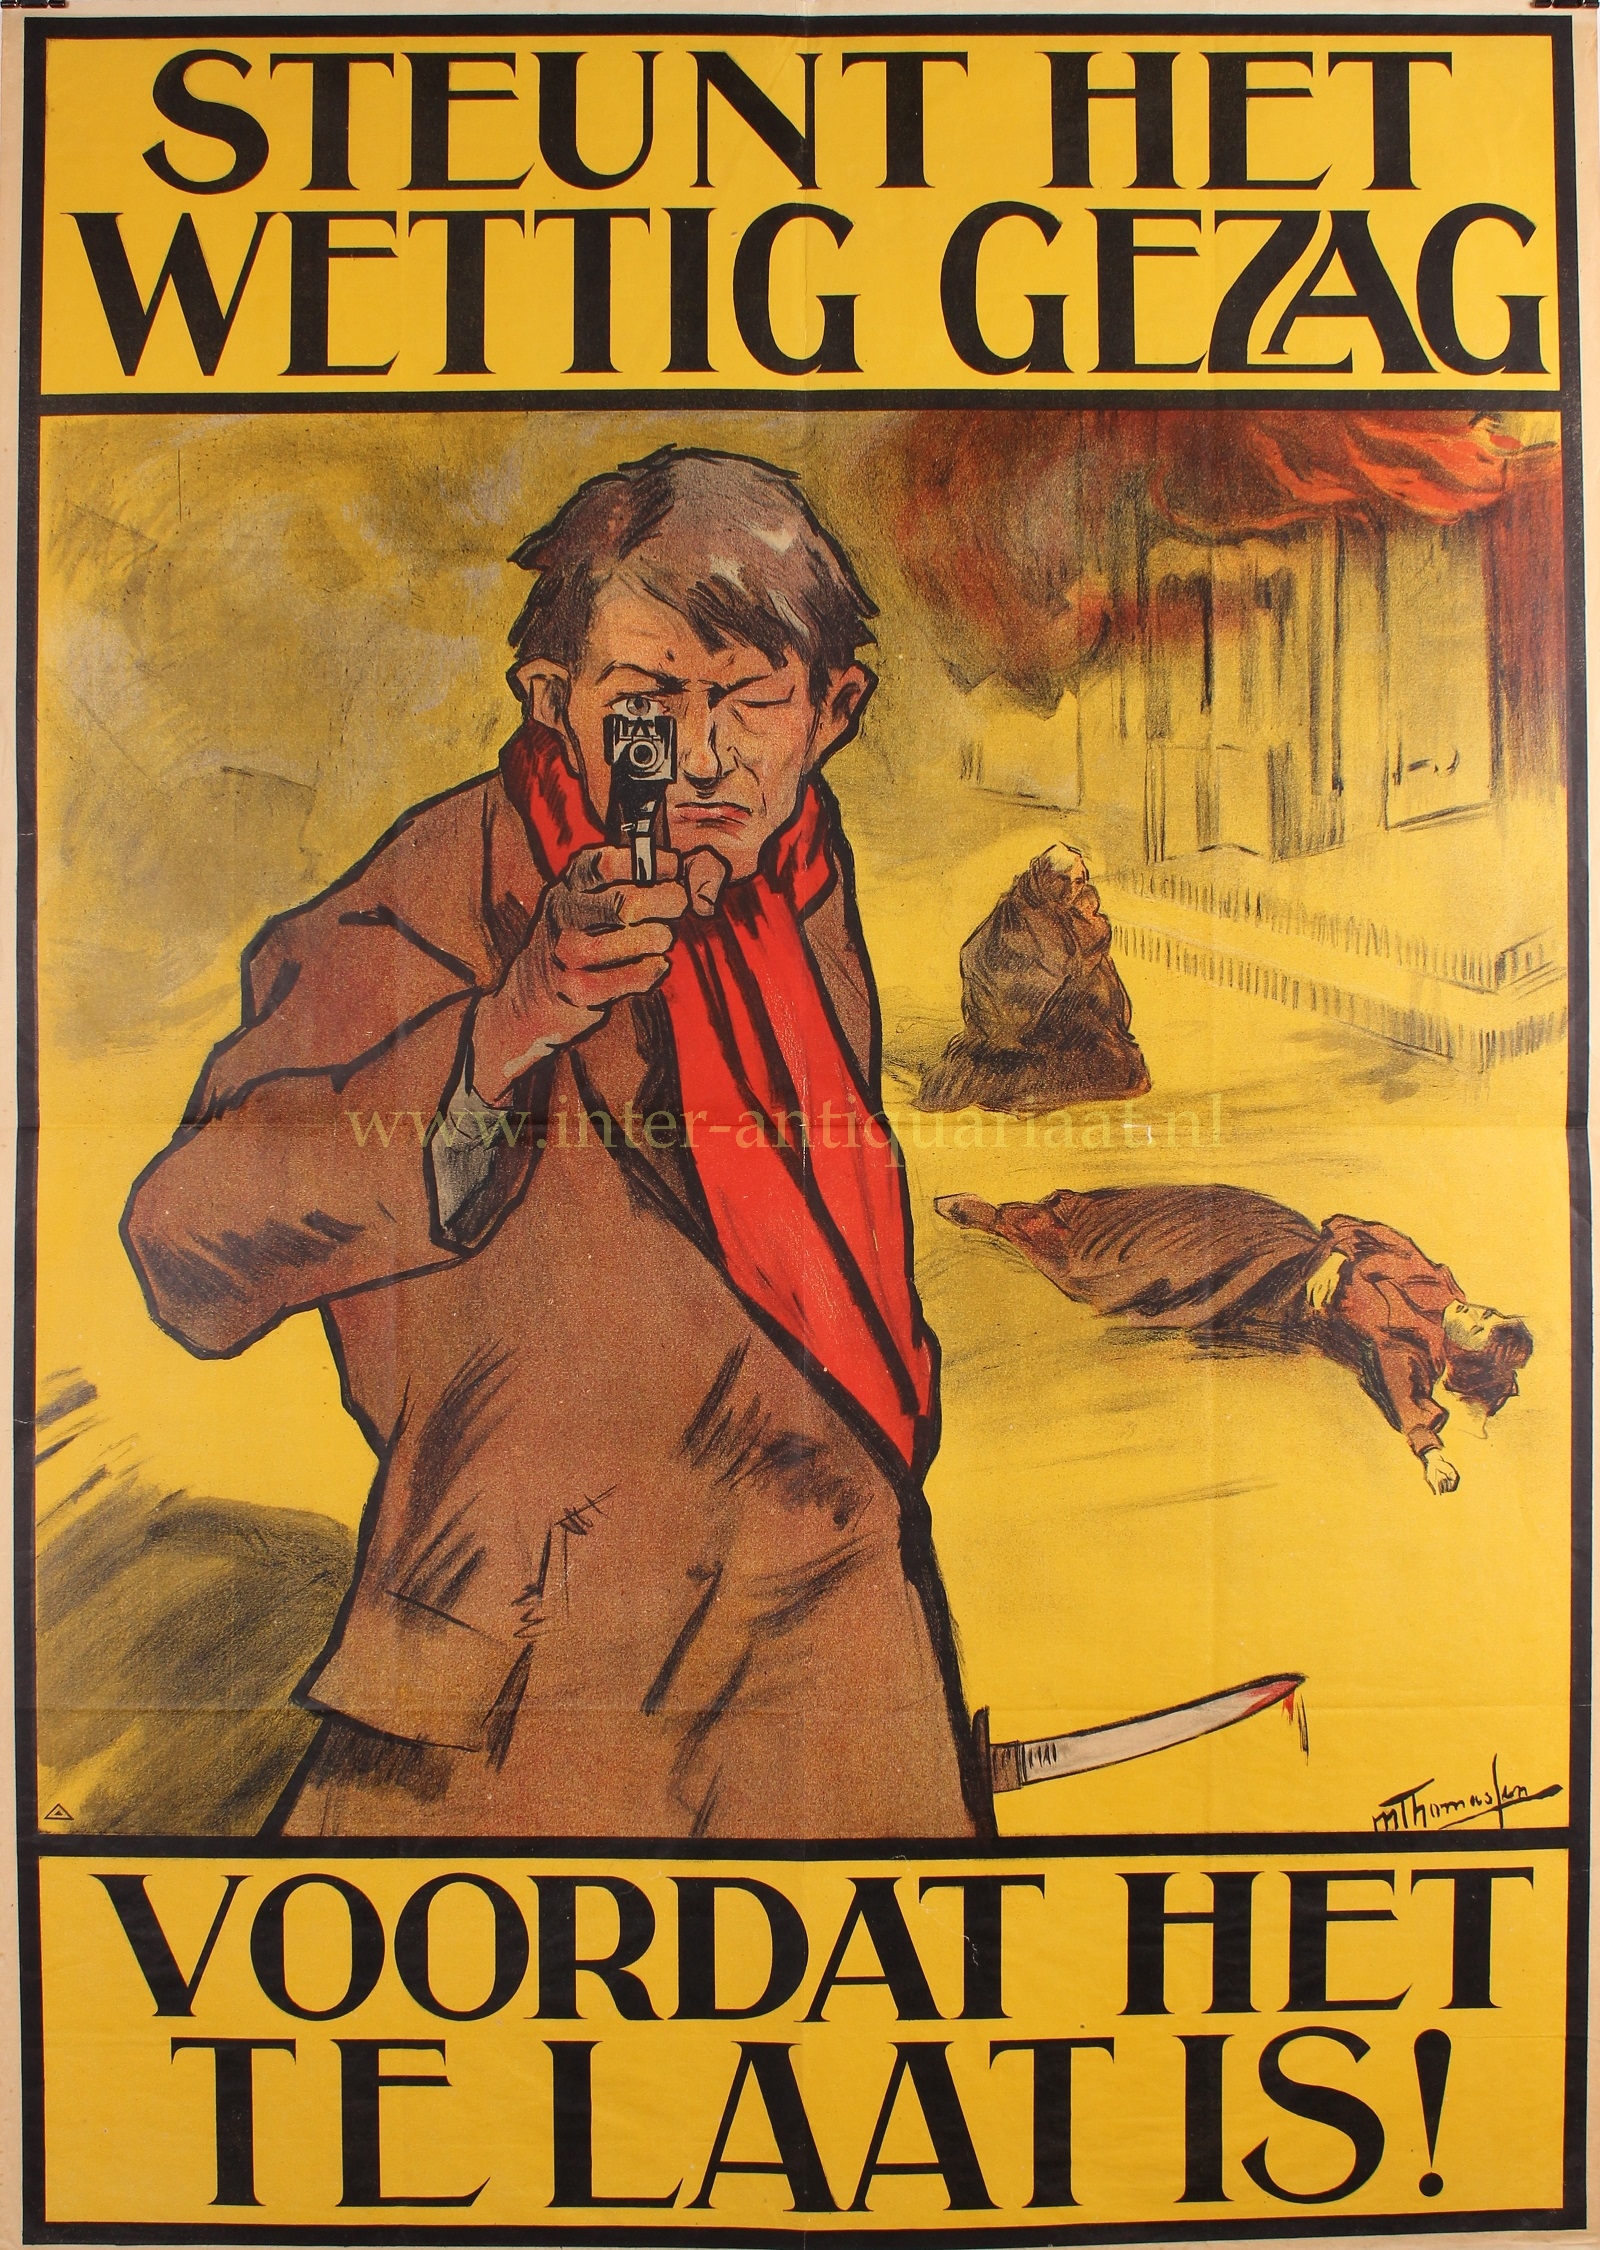  - Anti-revolutionary poster - M. Thomassen, 1918